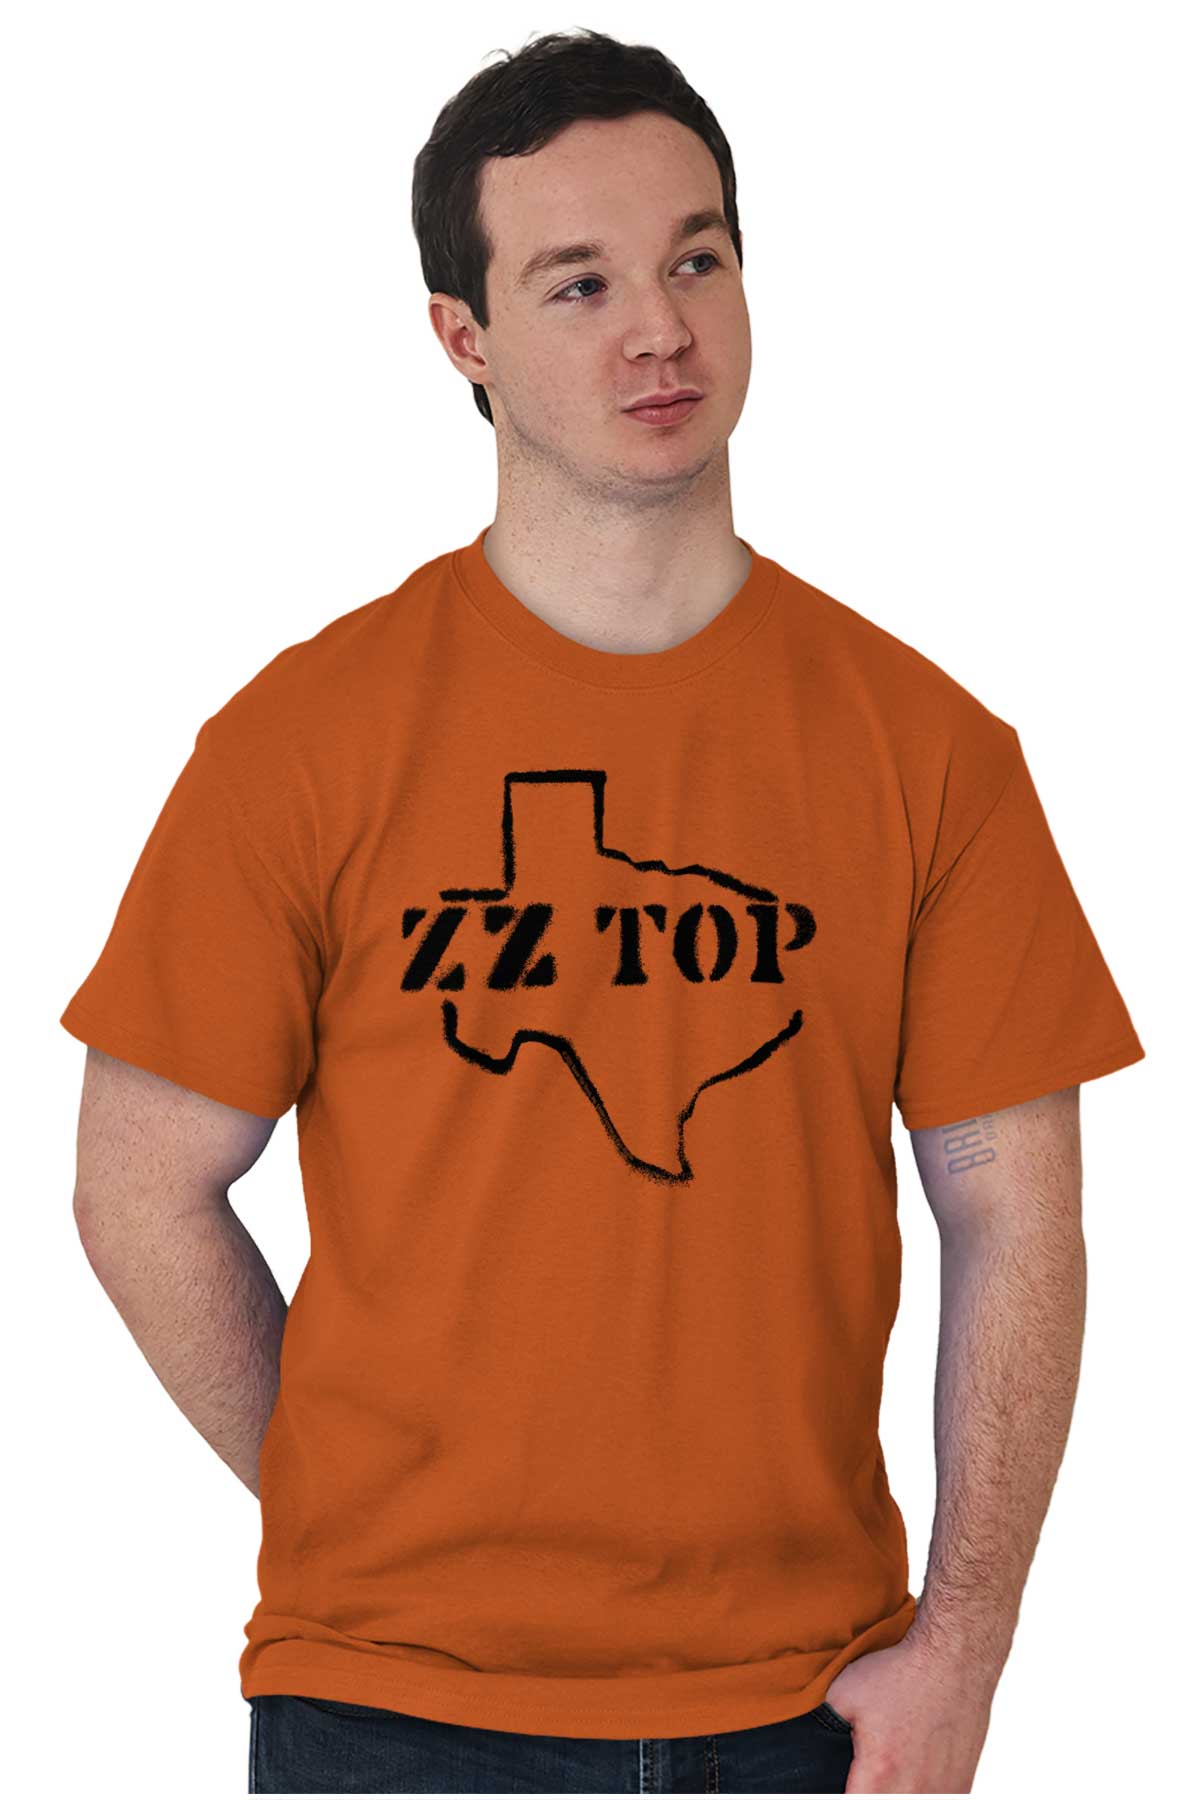 ZZ Top Official Concert Merch 80s Men's Graphic T Shirt Tees Brisco Brands 3X - image 5 of 6